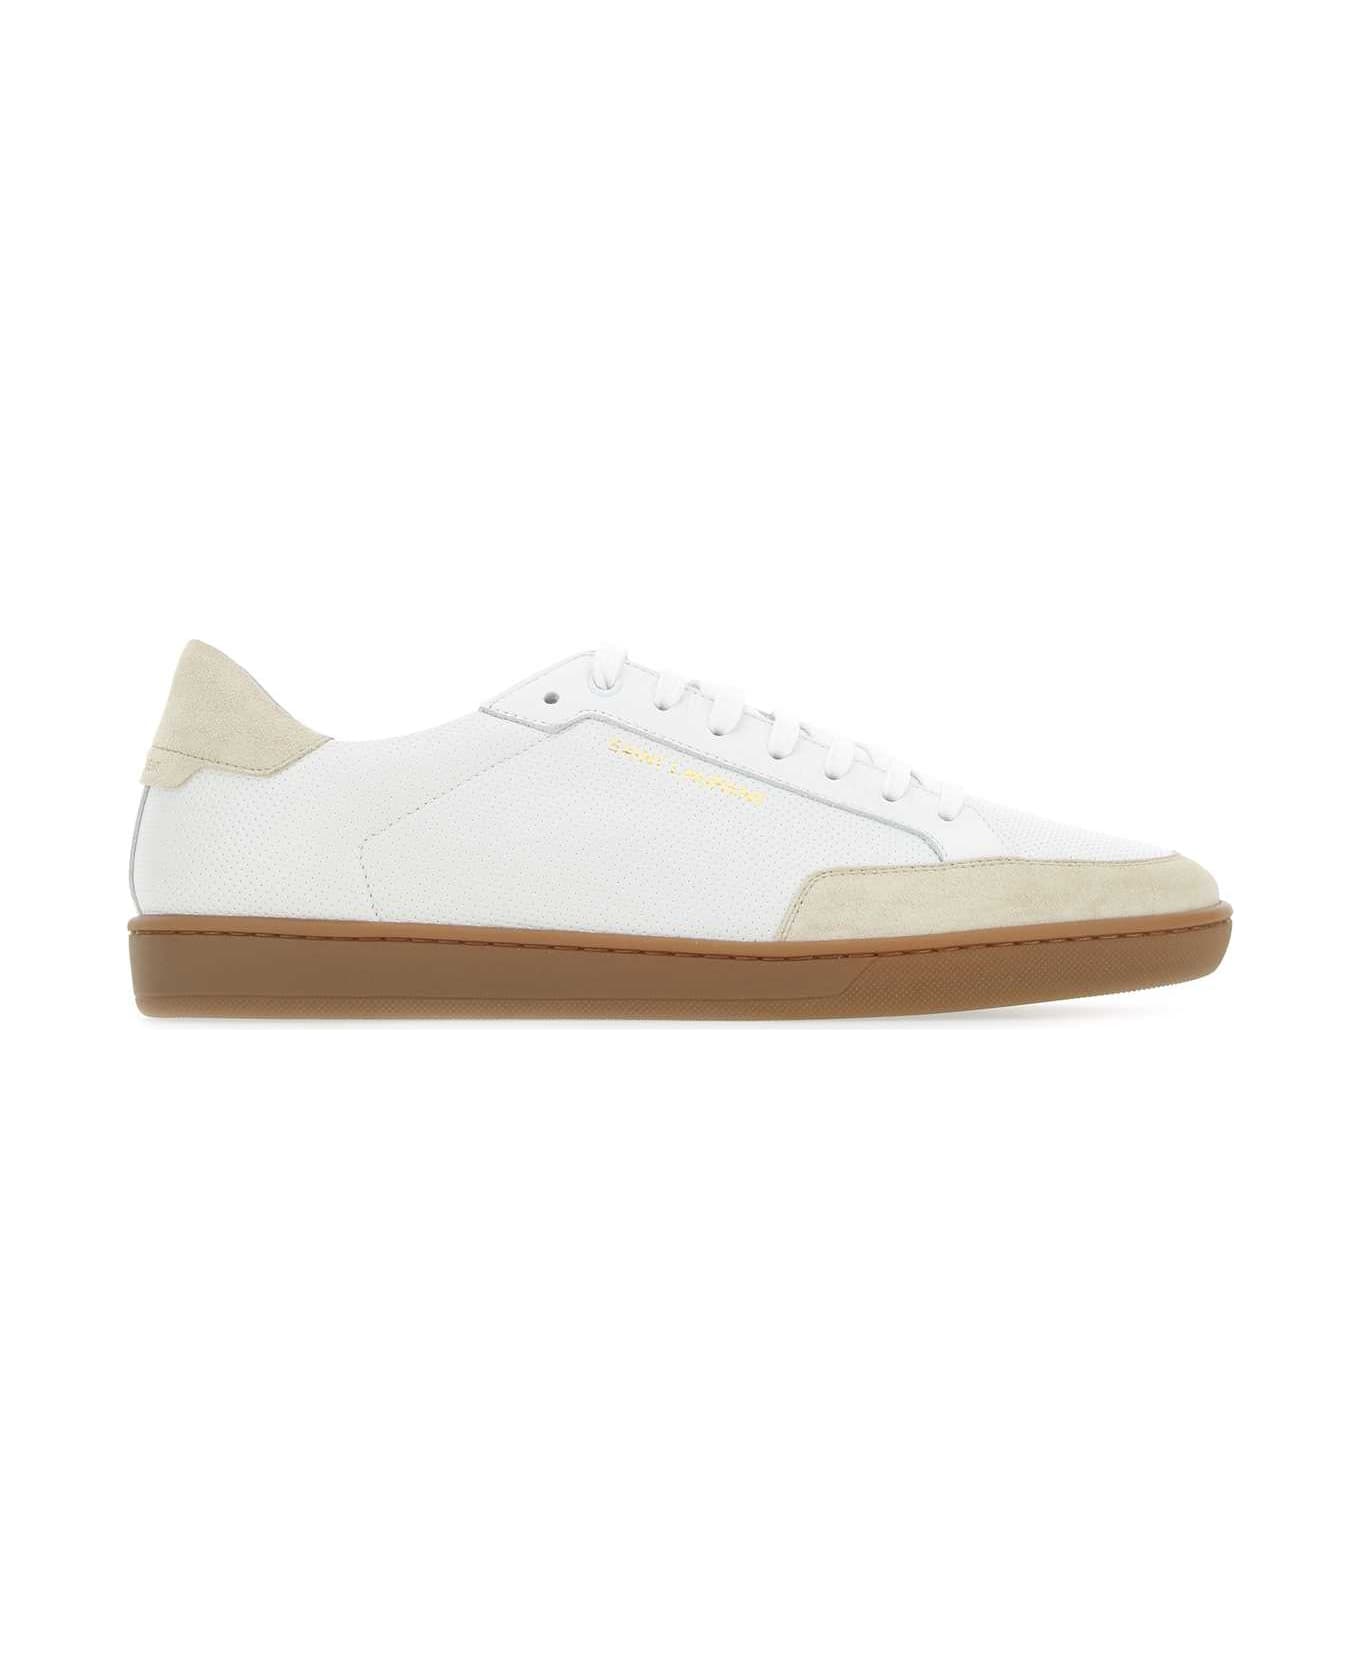 Saint Laurent White Leather Sneakers - BLOPBLOPBLOPAN